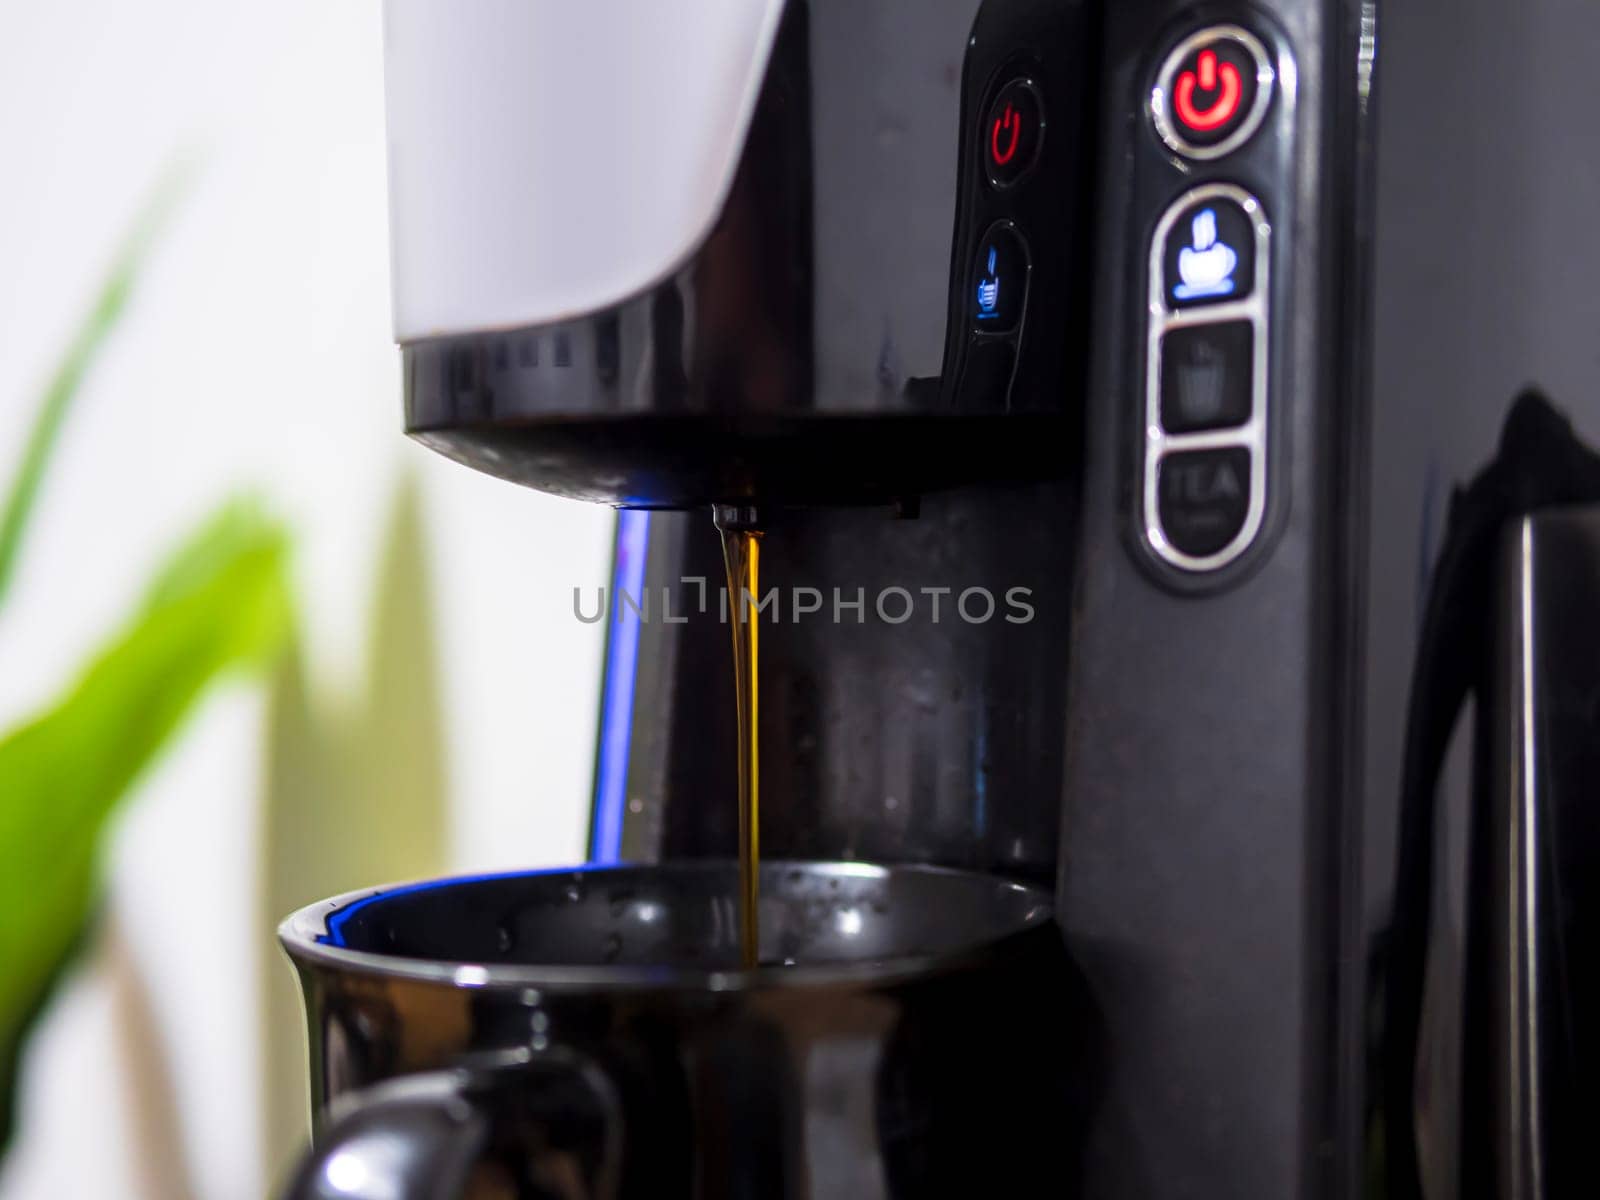 Coffee machine with capsule. Pouring coffee. Espresso machine making fresh coffee